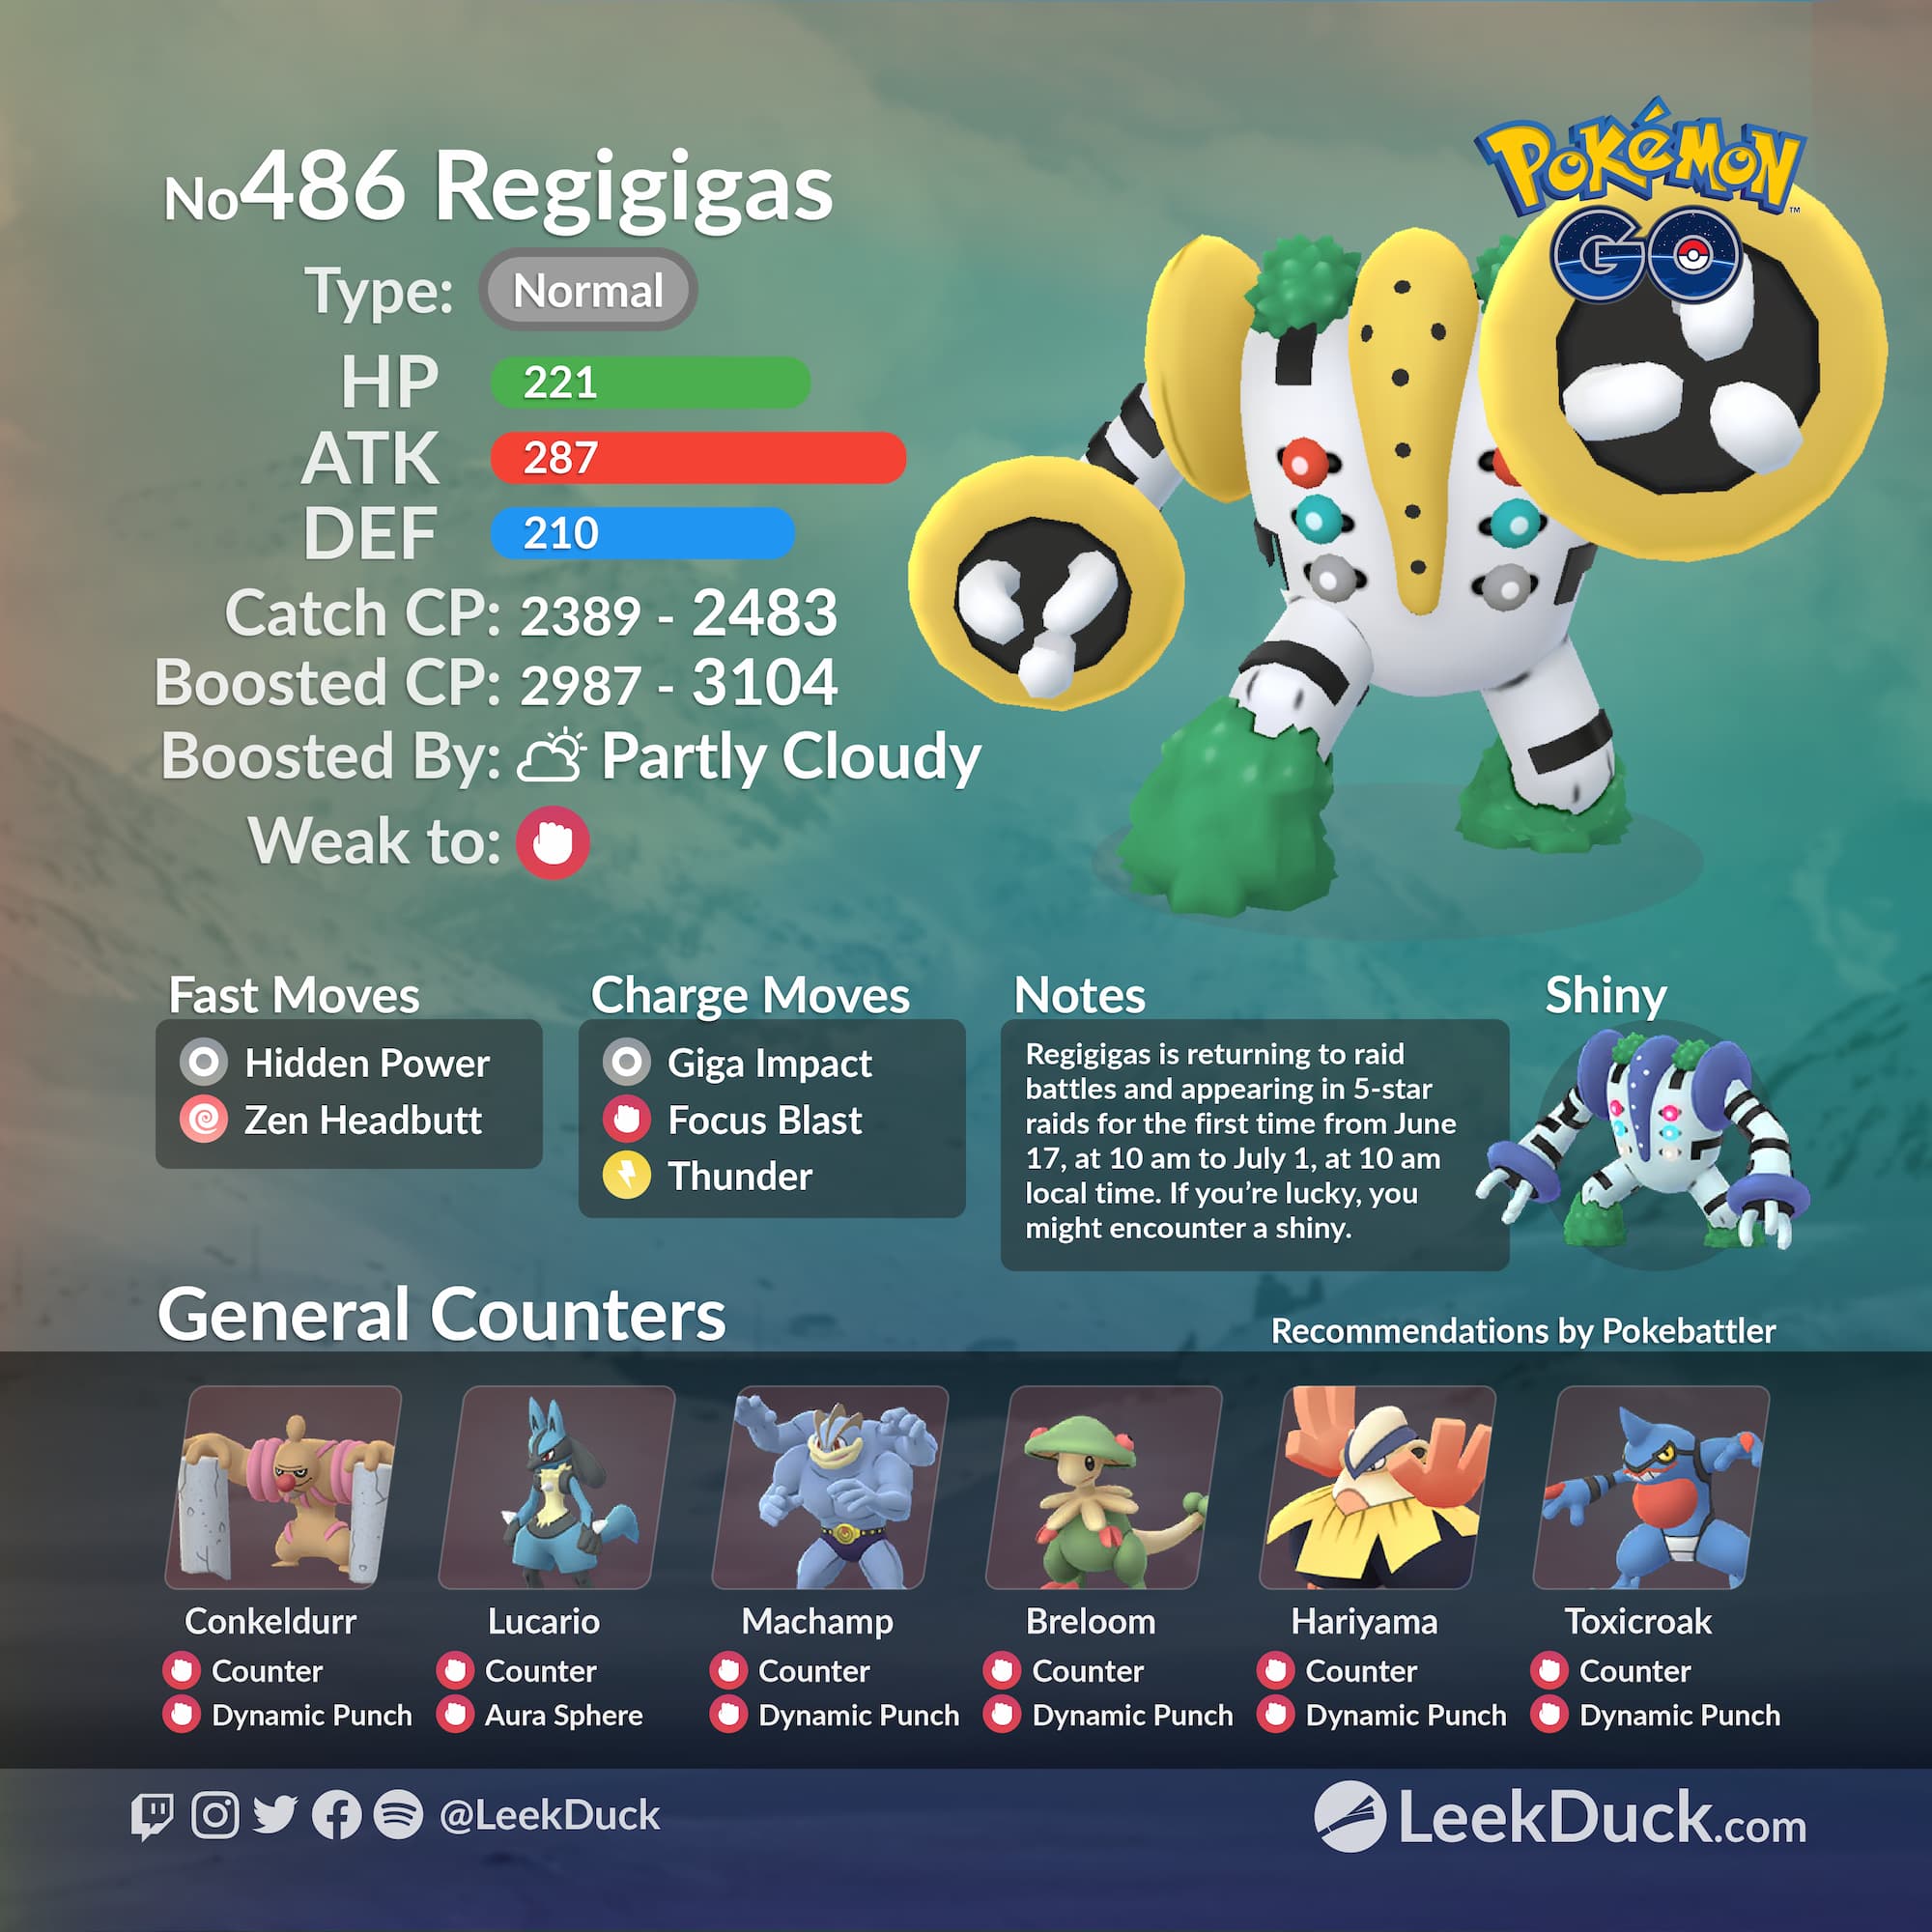 GO Field Guide - Regigigas will be joining the Pokemon GO